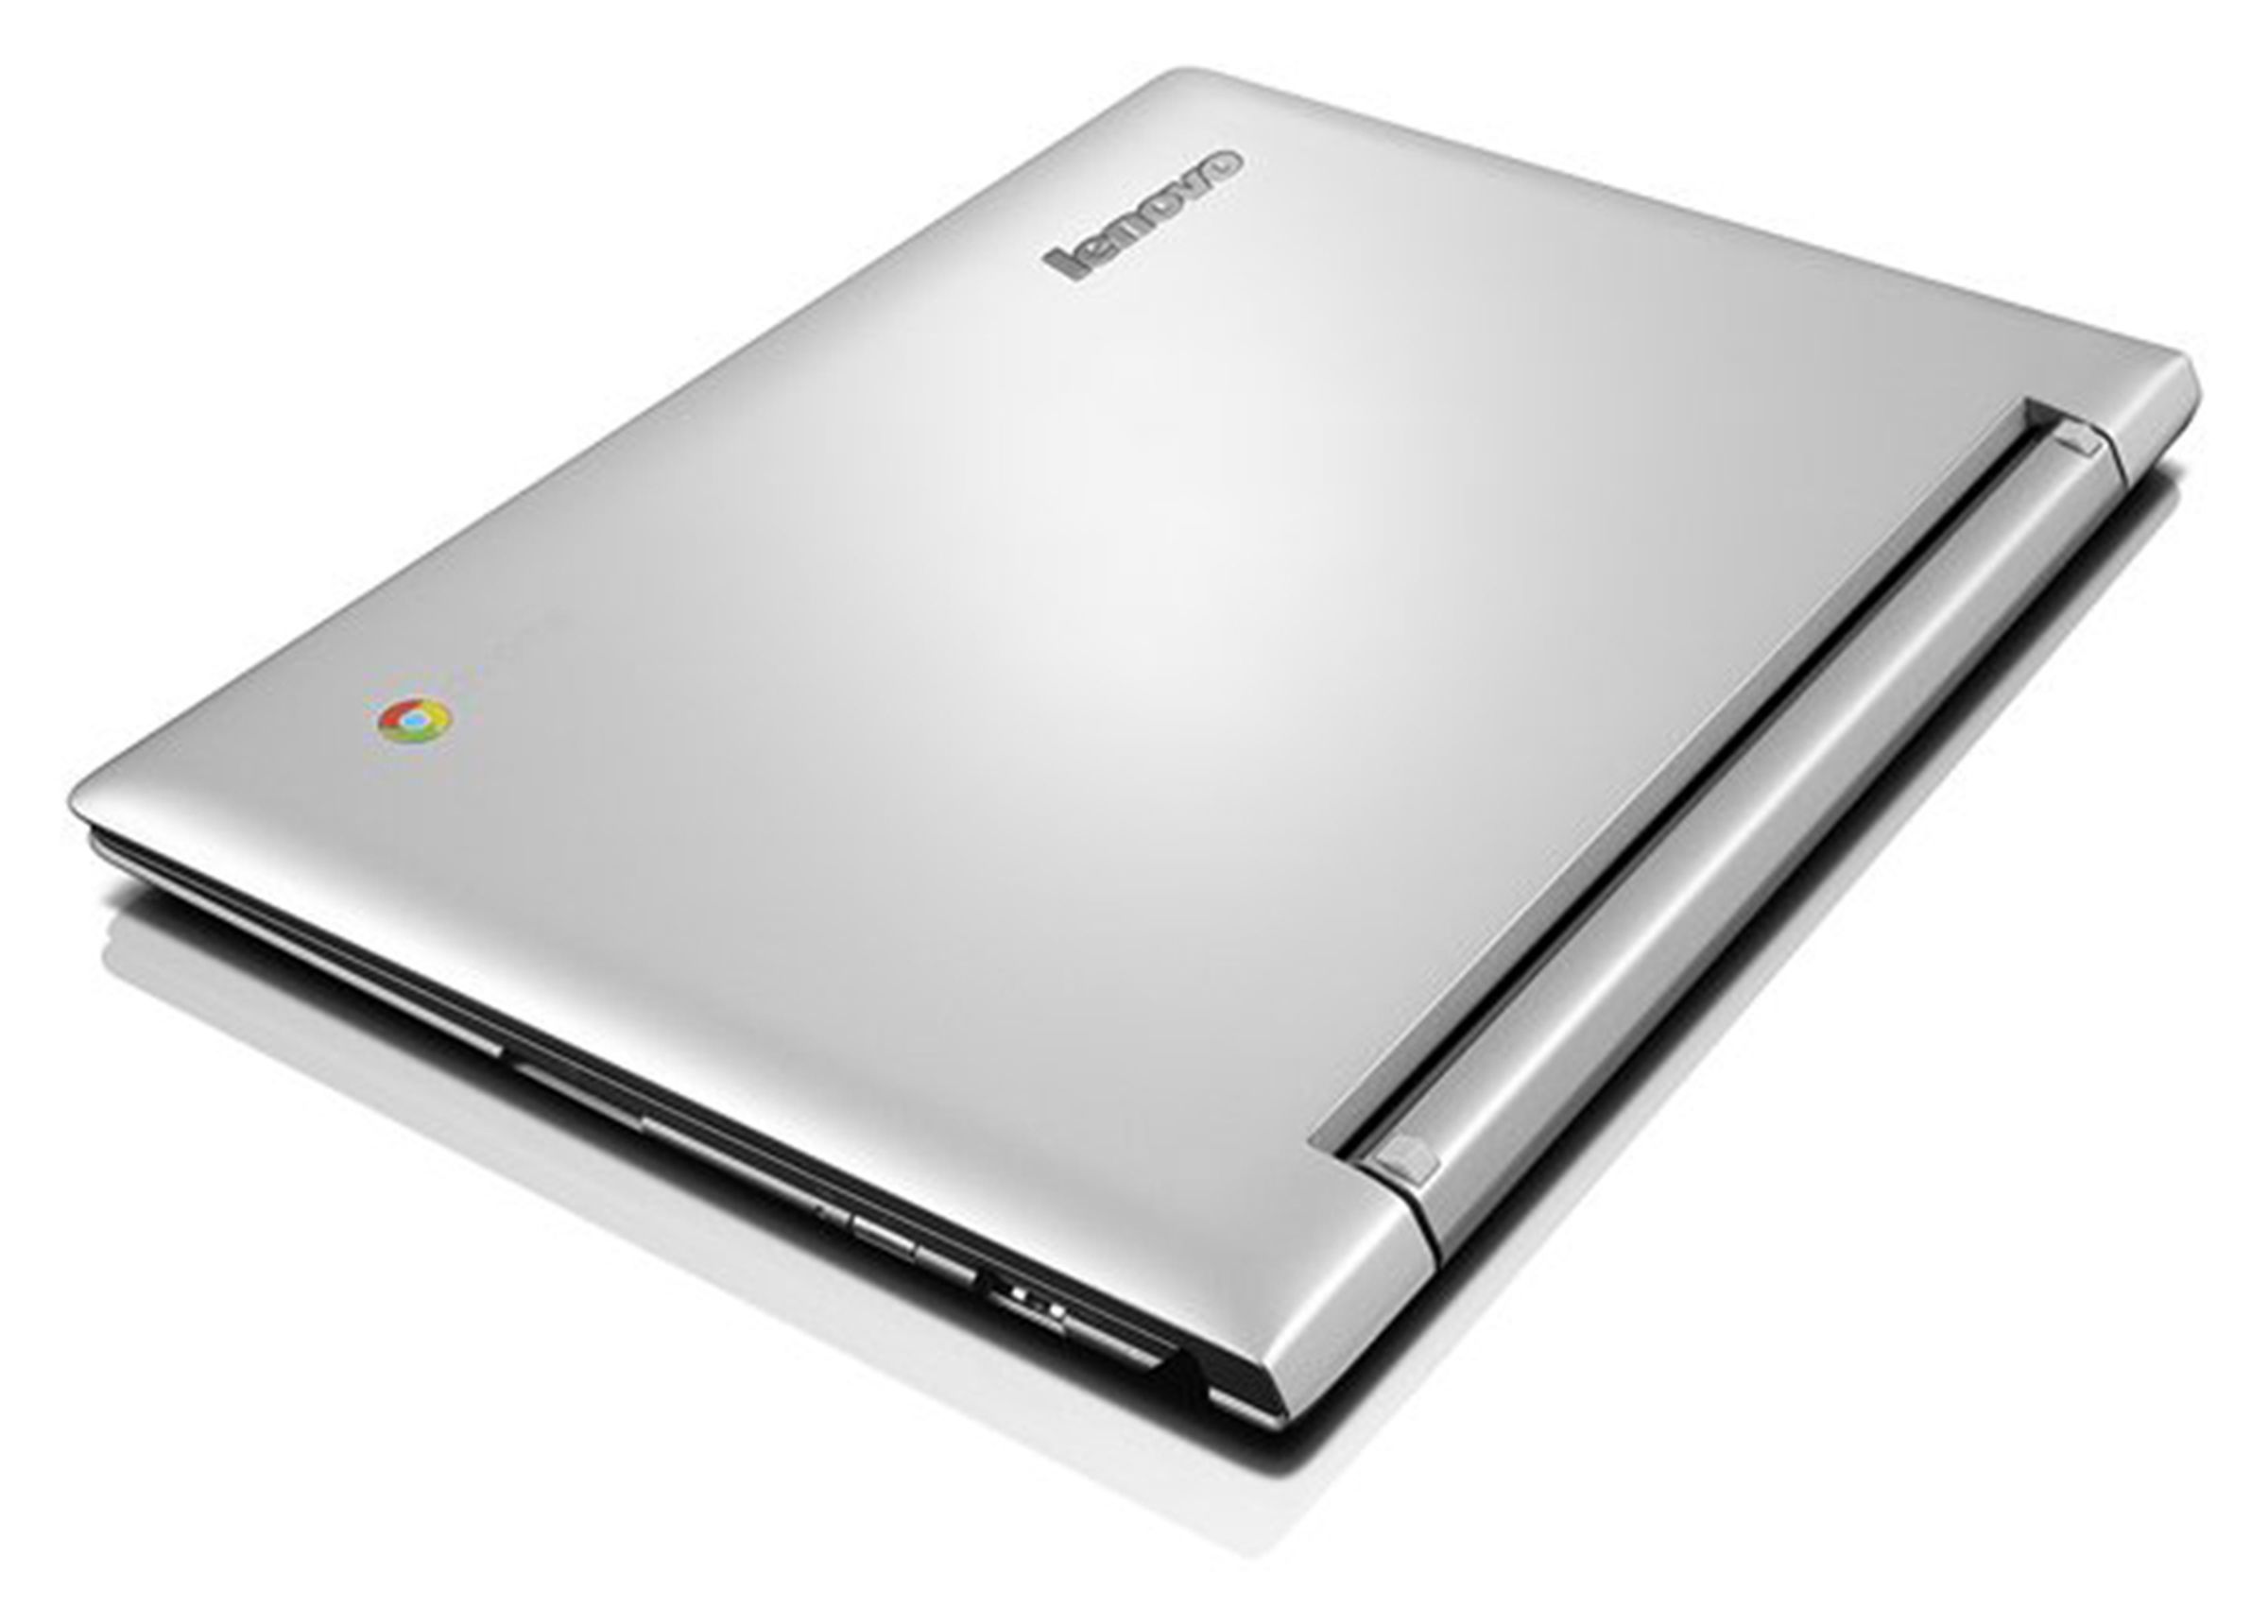 Lenovo N20p Chromebook pictures